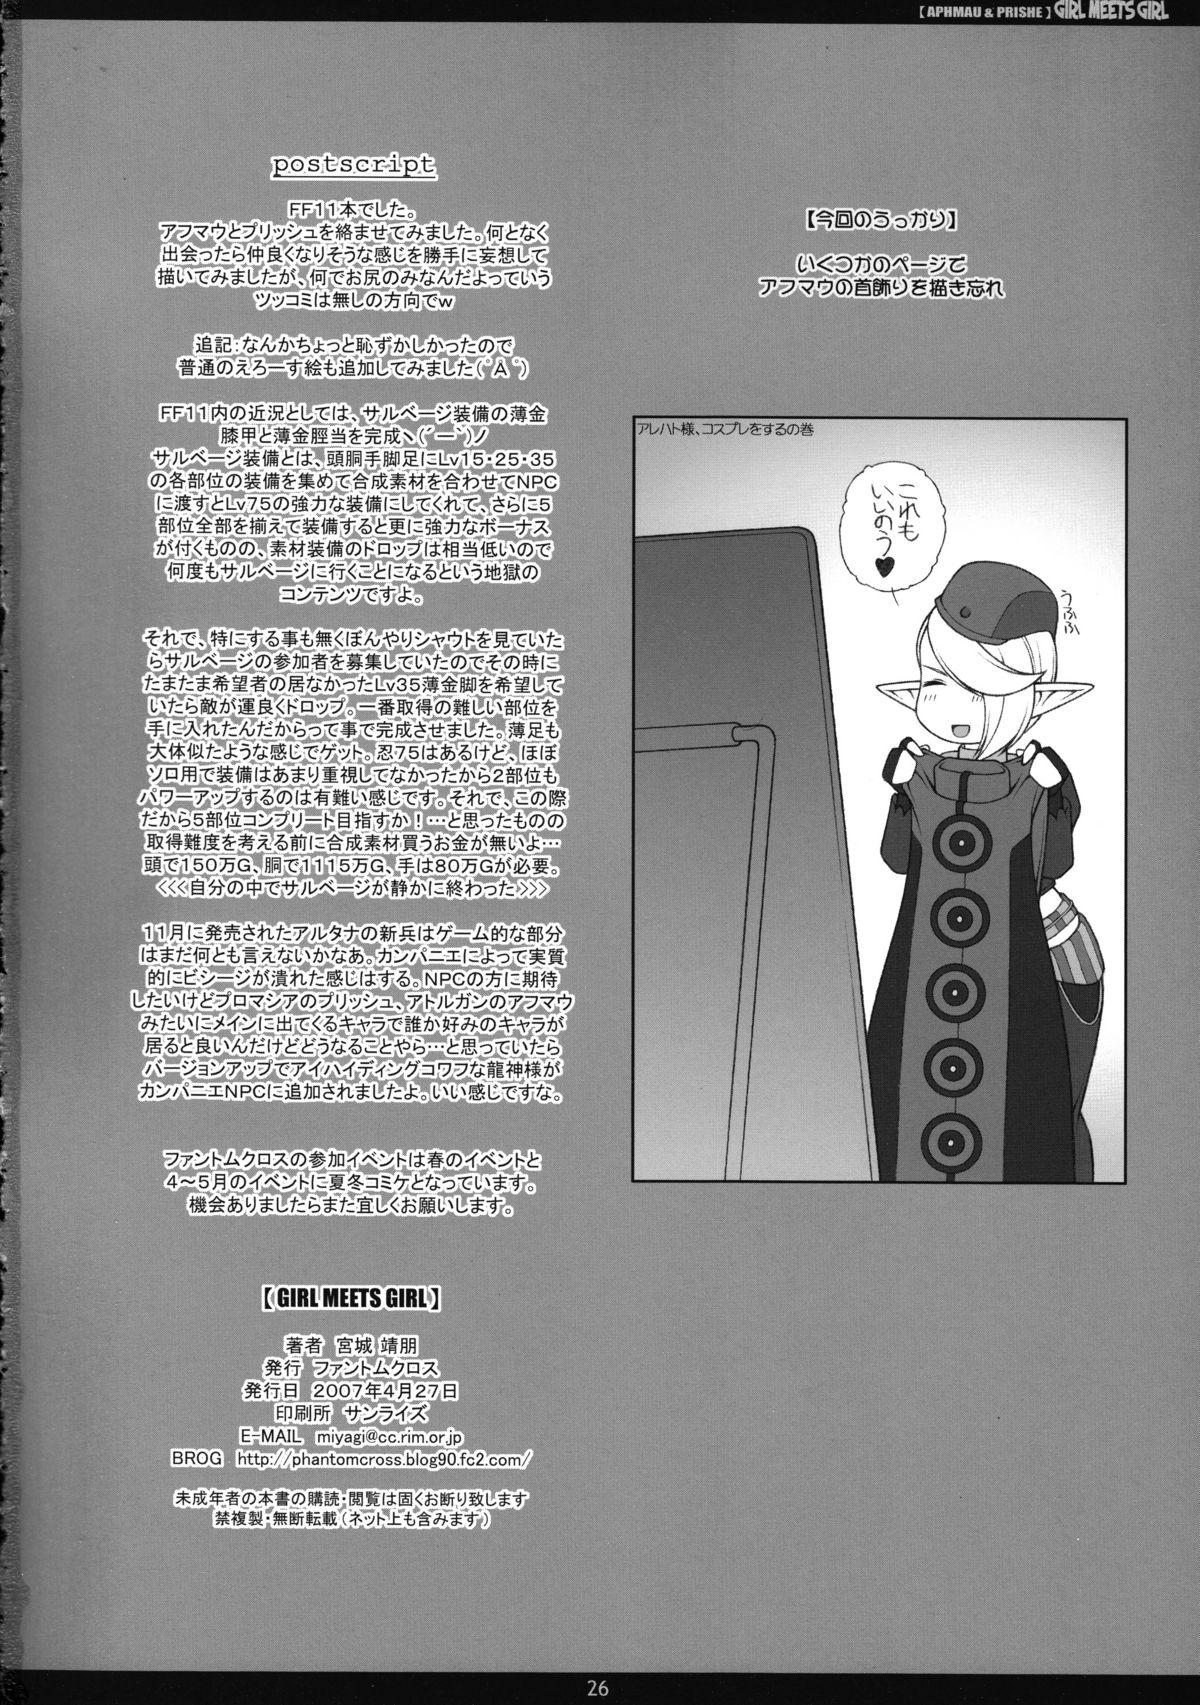 Sfm GIRL MEETS GIRL - Final fantasy xi Chudai - Page 25